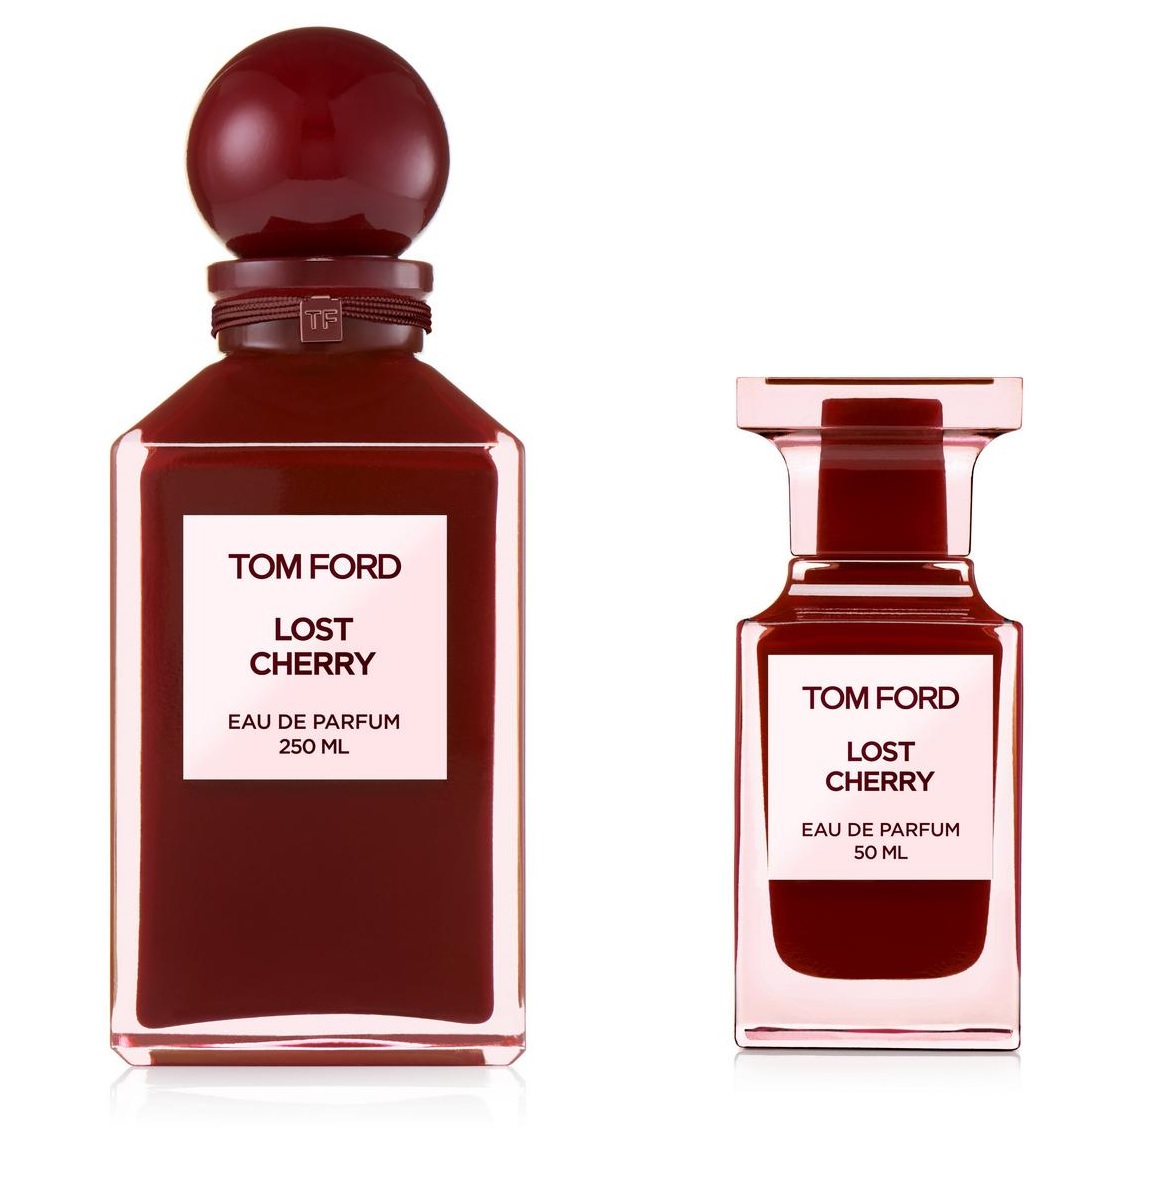 Tom Ford Lost Cherry Eau De Parfum Linh Perfume